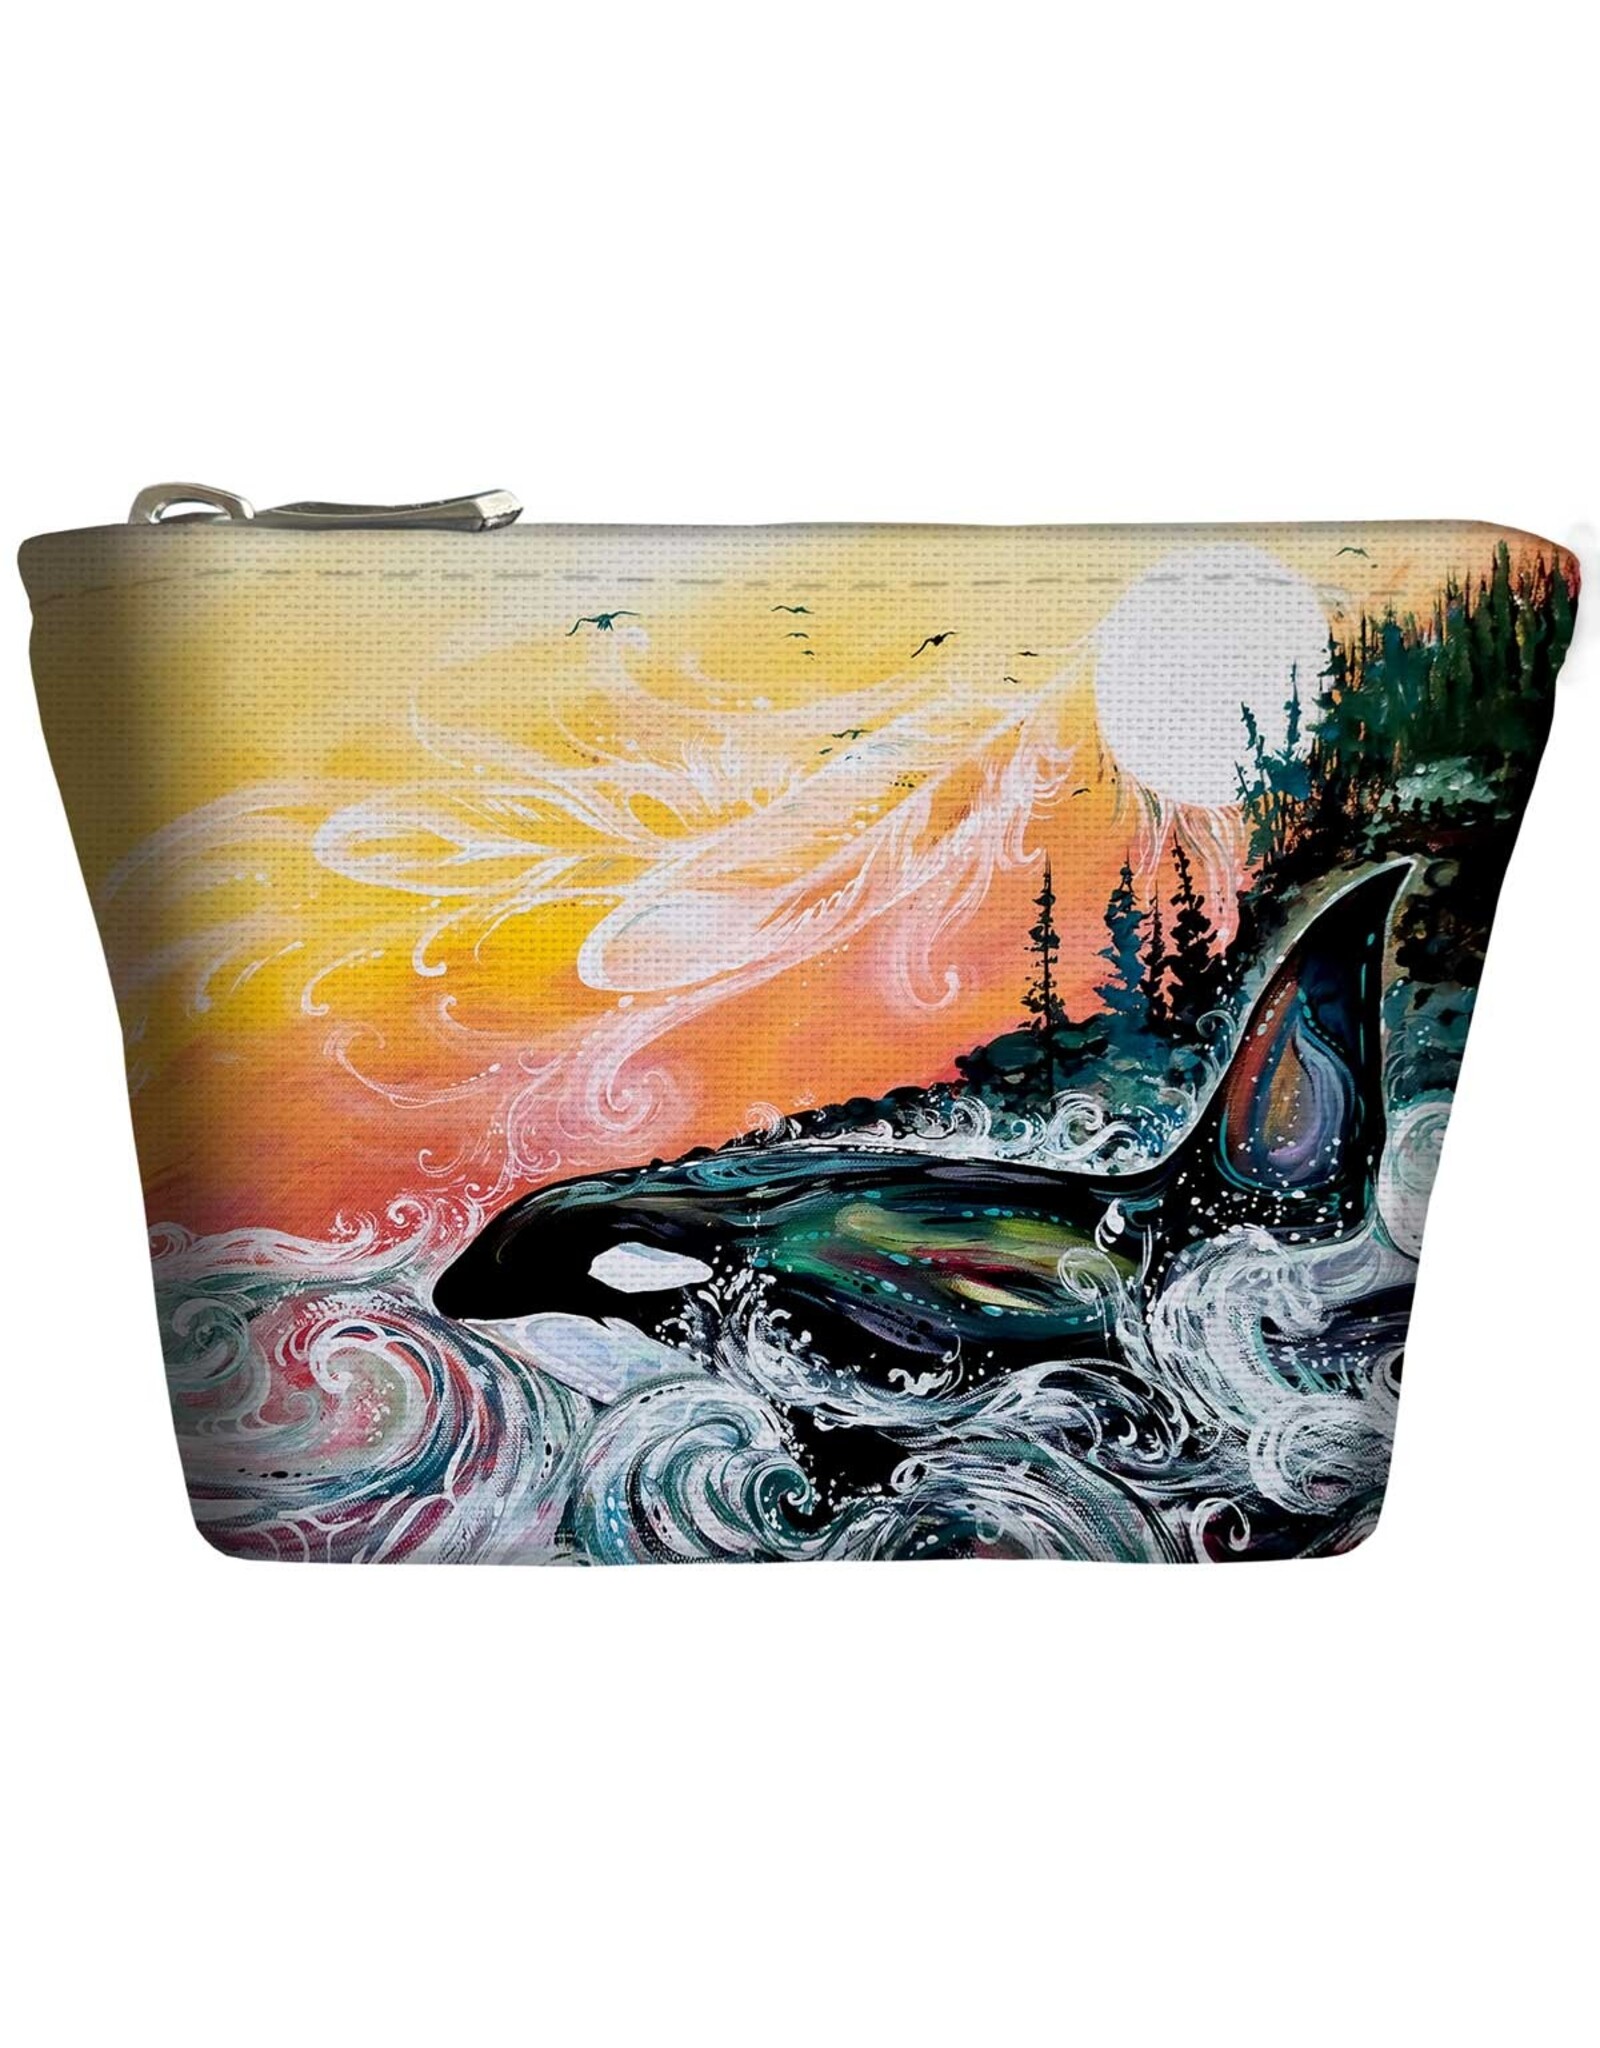 Killer Whale Sunset by Carla Joseph Coin Purse - 20290COIN